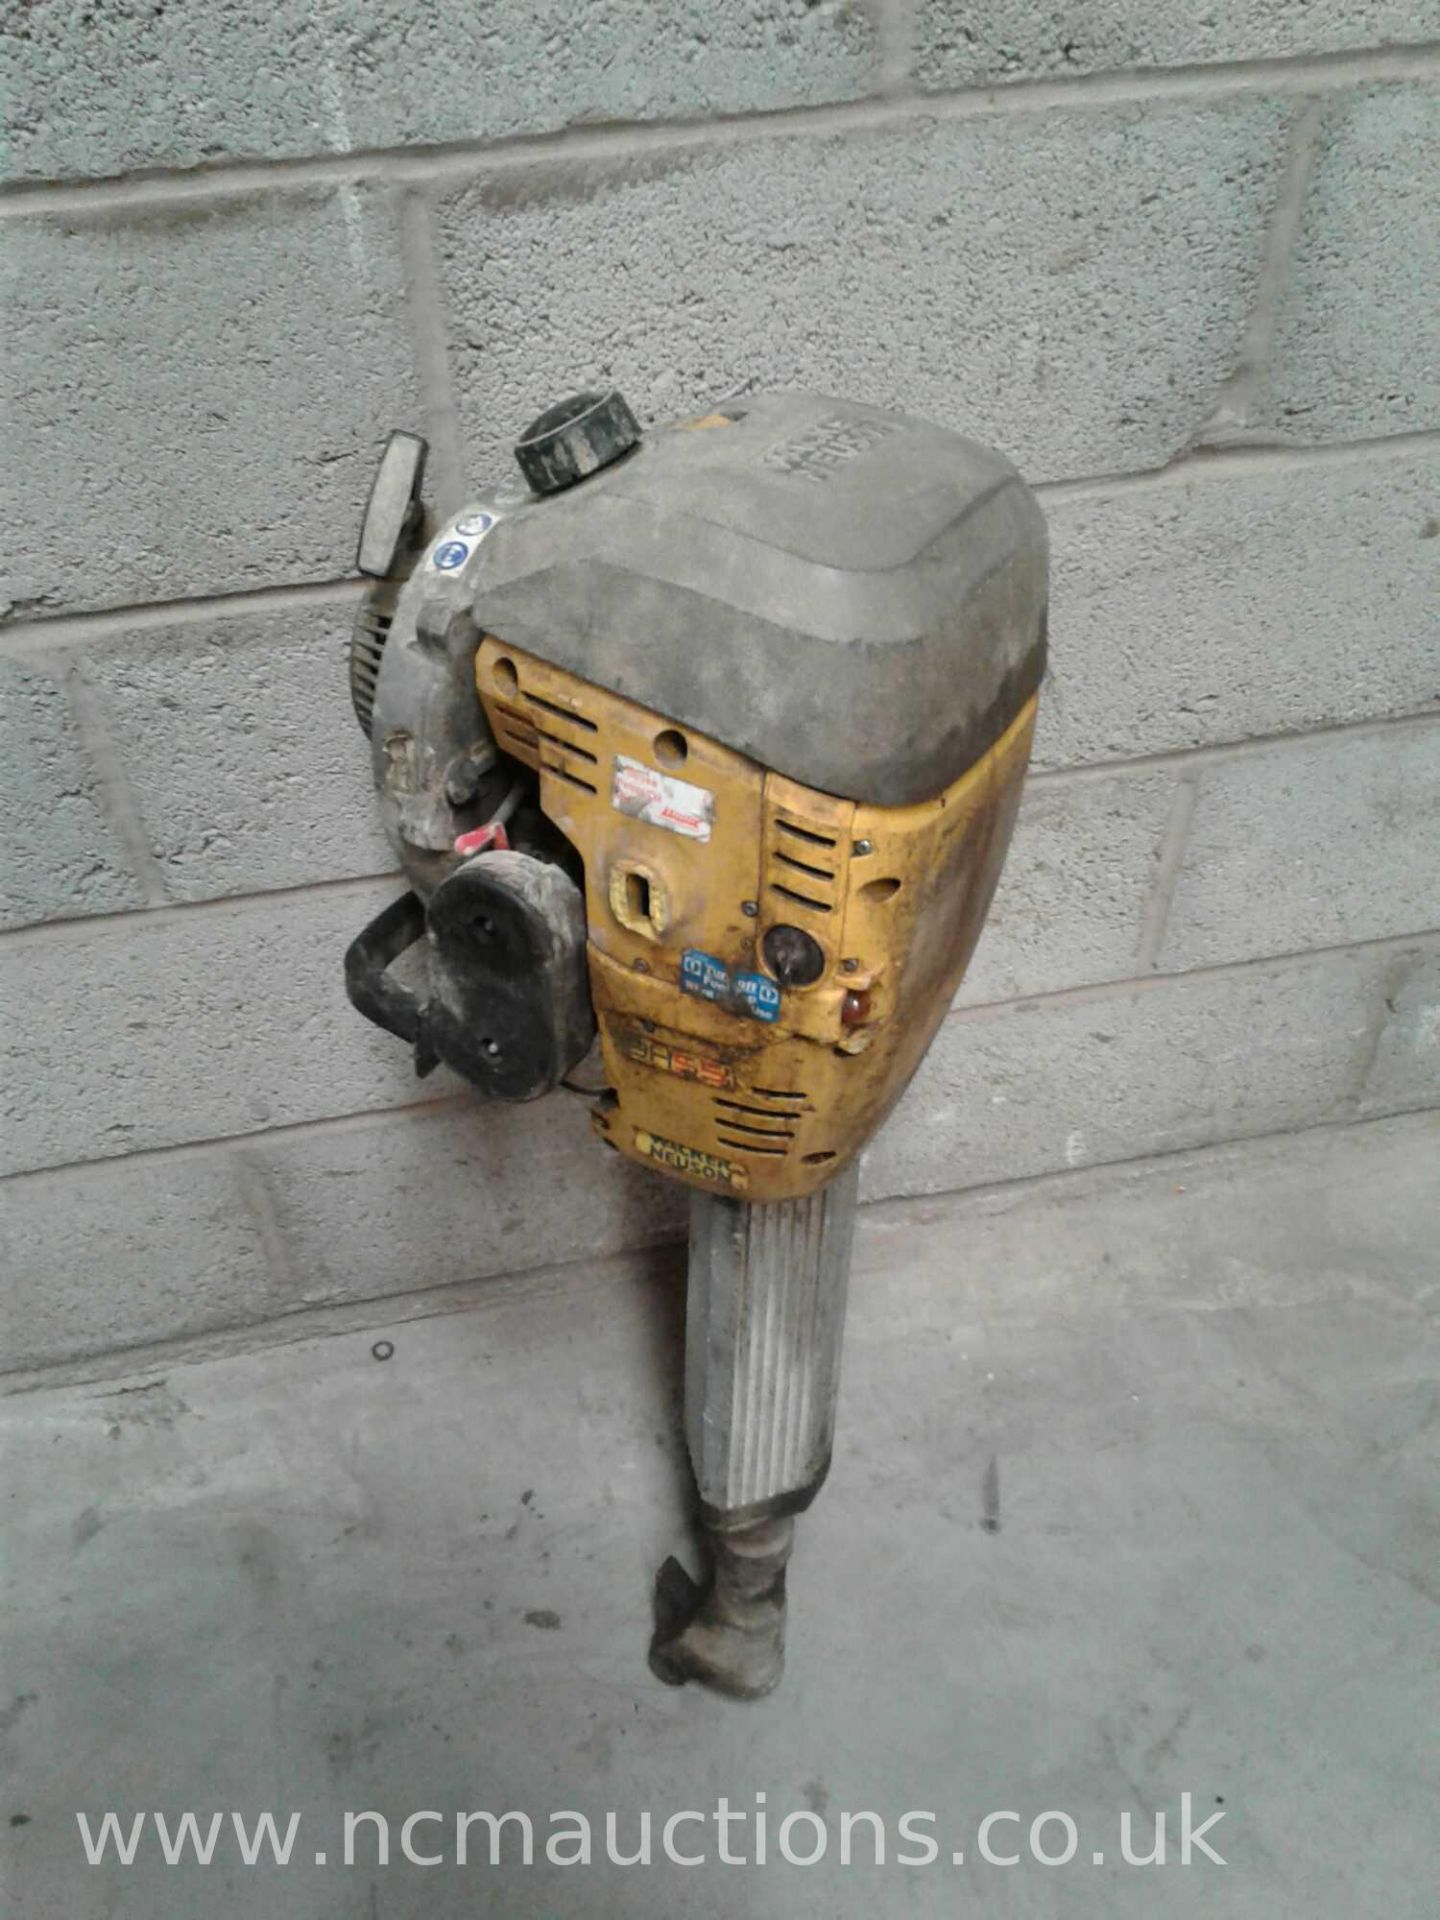 Wacker neuson petrol powered breaker - Image 3 of 3